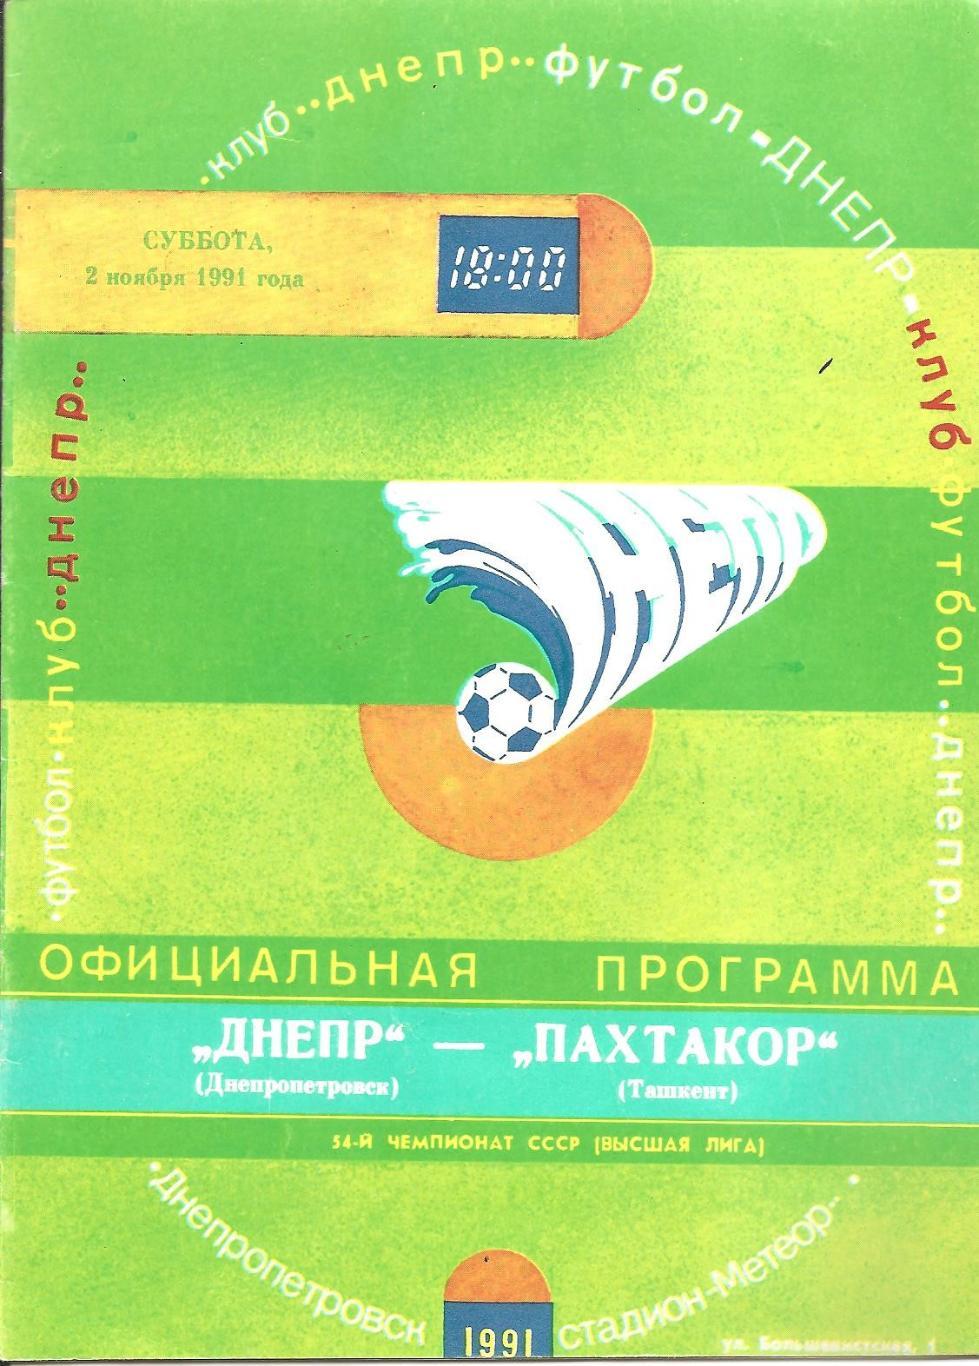 Днепр Днепропетровск - Пахтакор Ташкент 2.11.1991 г. (Д)